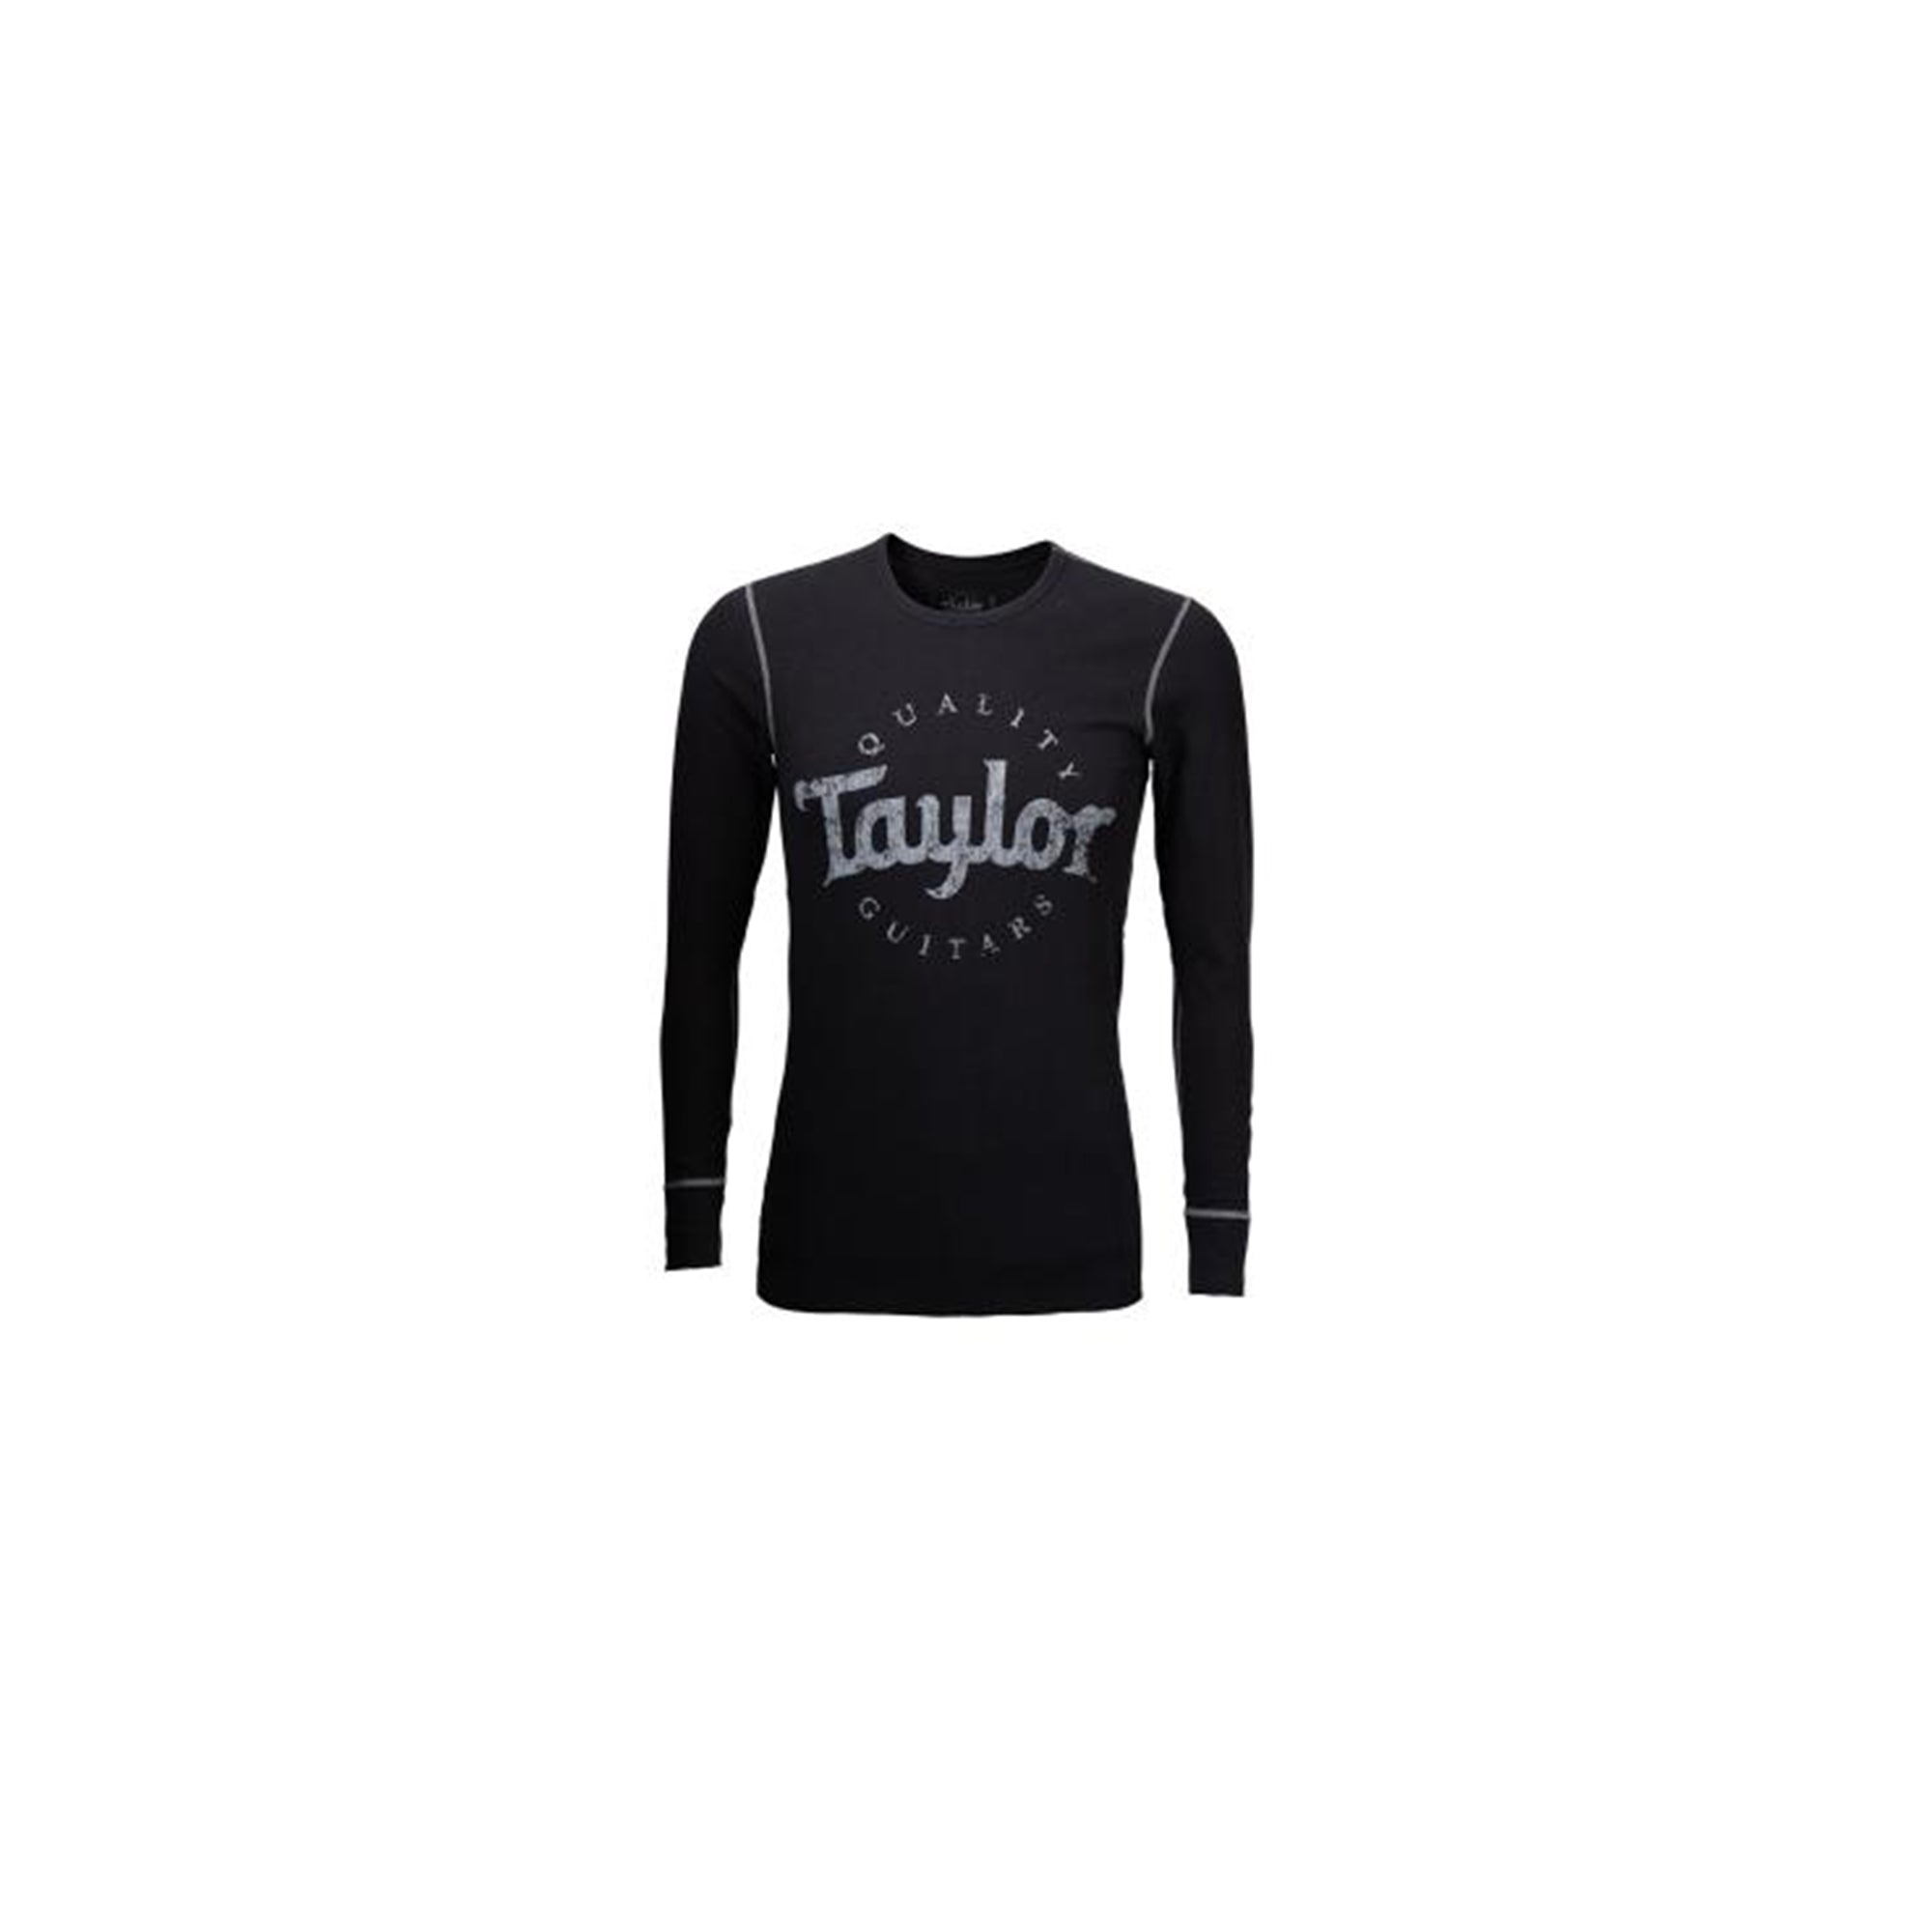 Taylor 20225 Men's Thermal Shirt, Aged Logo, Black/Grey (Medium)